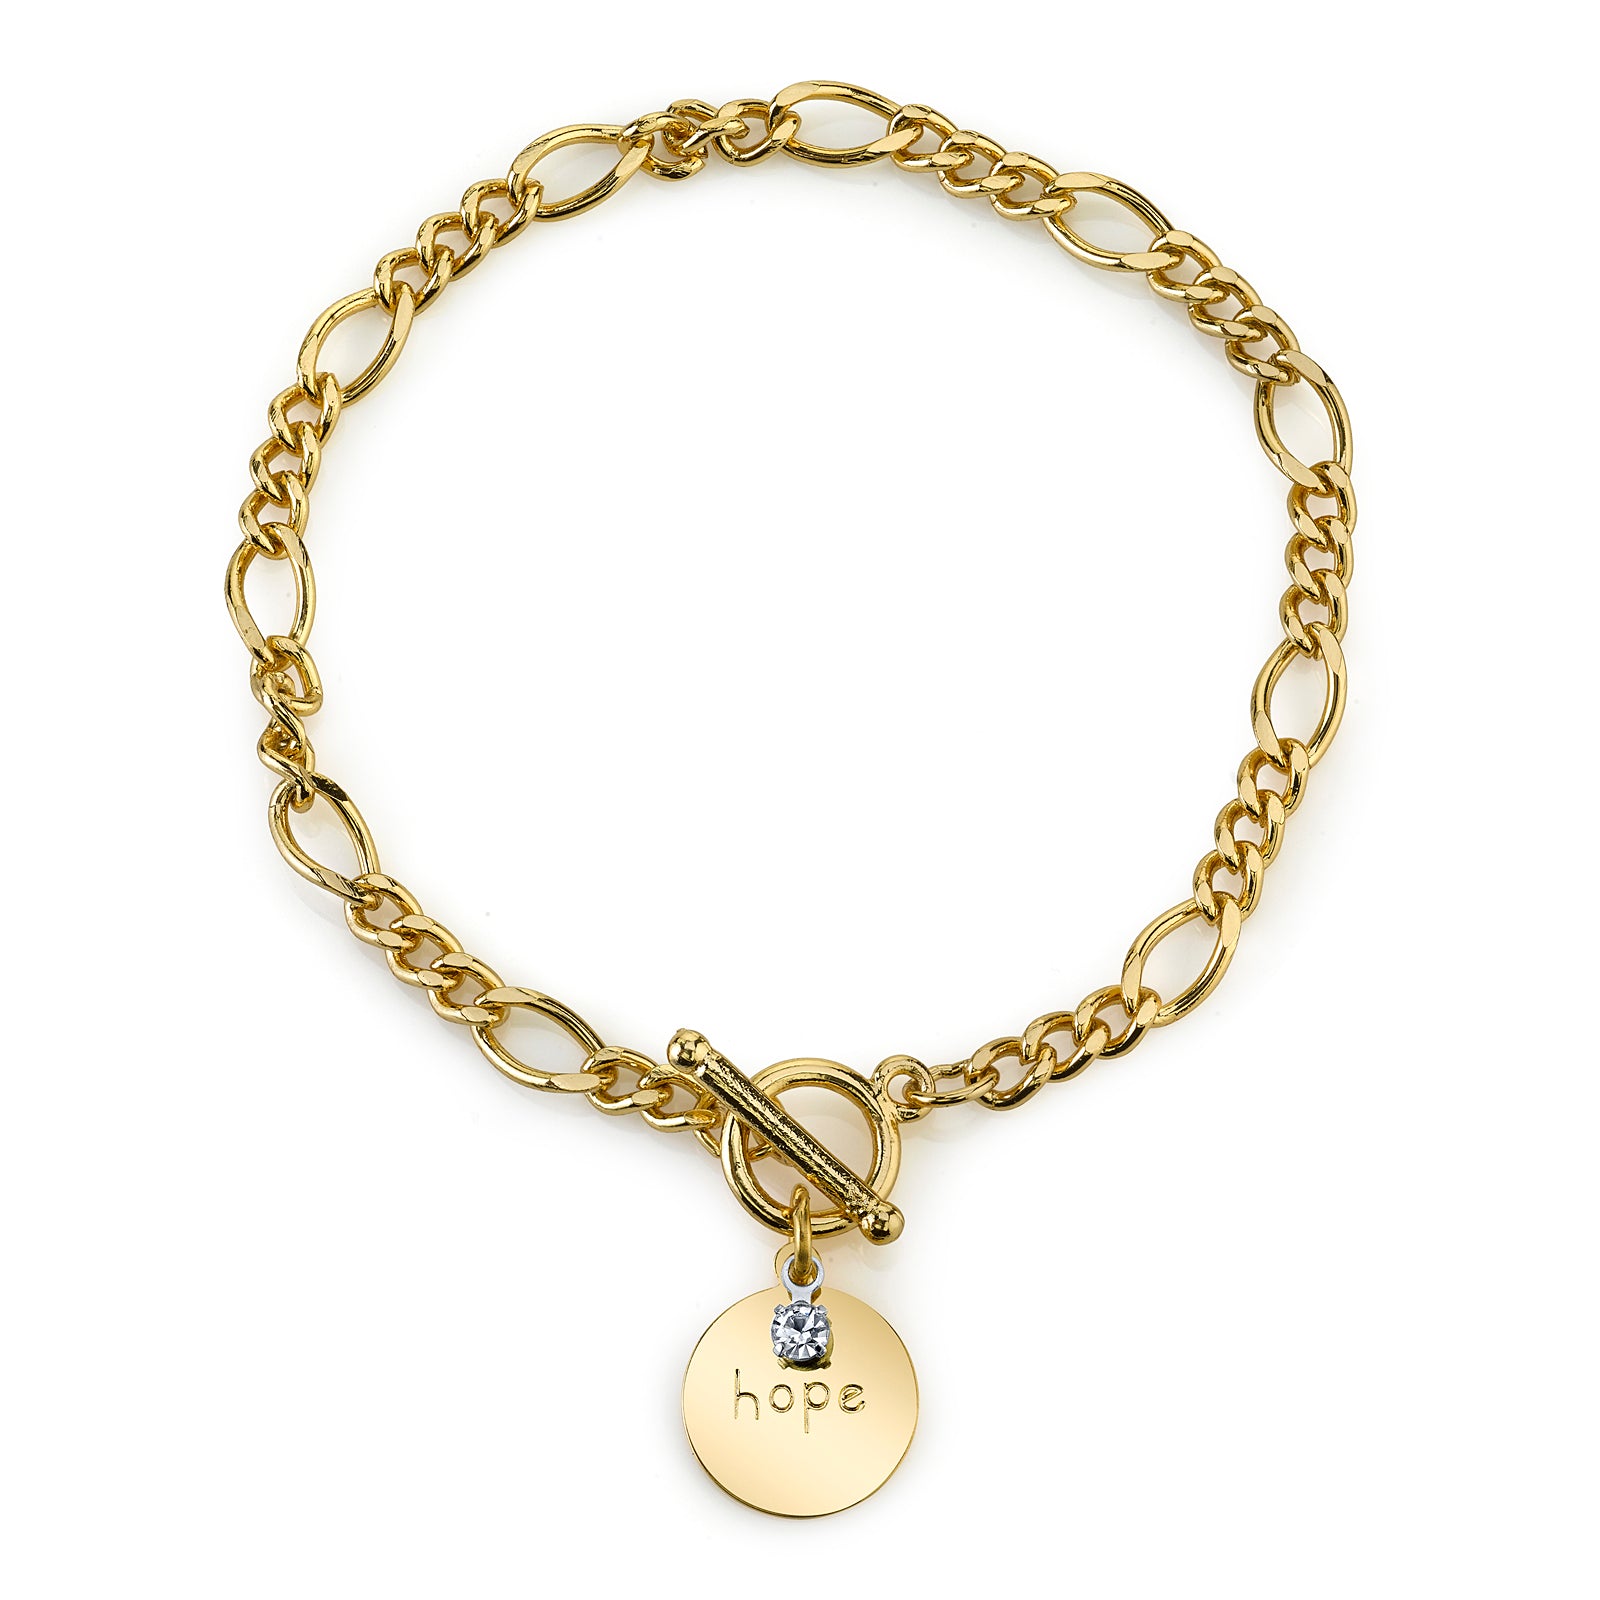 1928 Jewelry Sentiments Toggle Bracelet